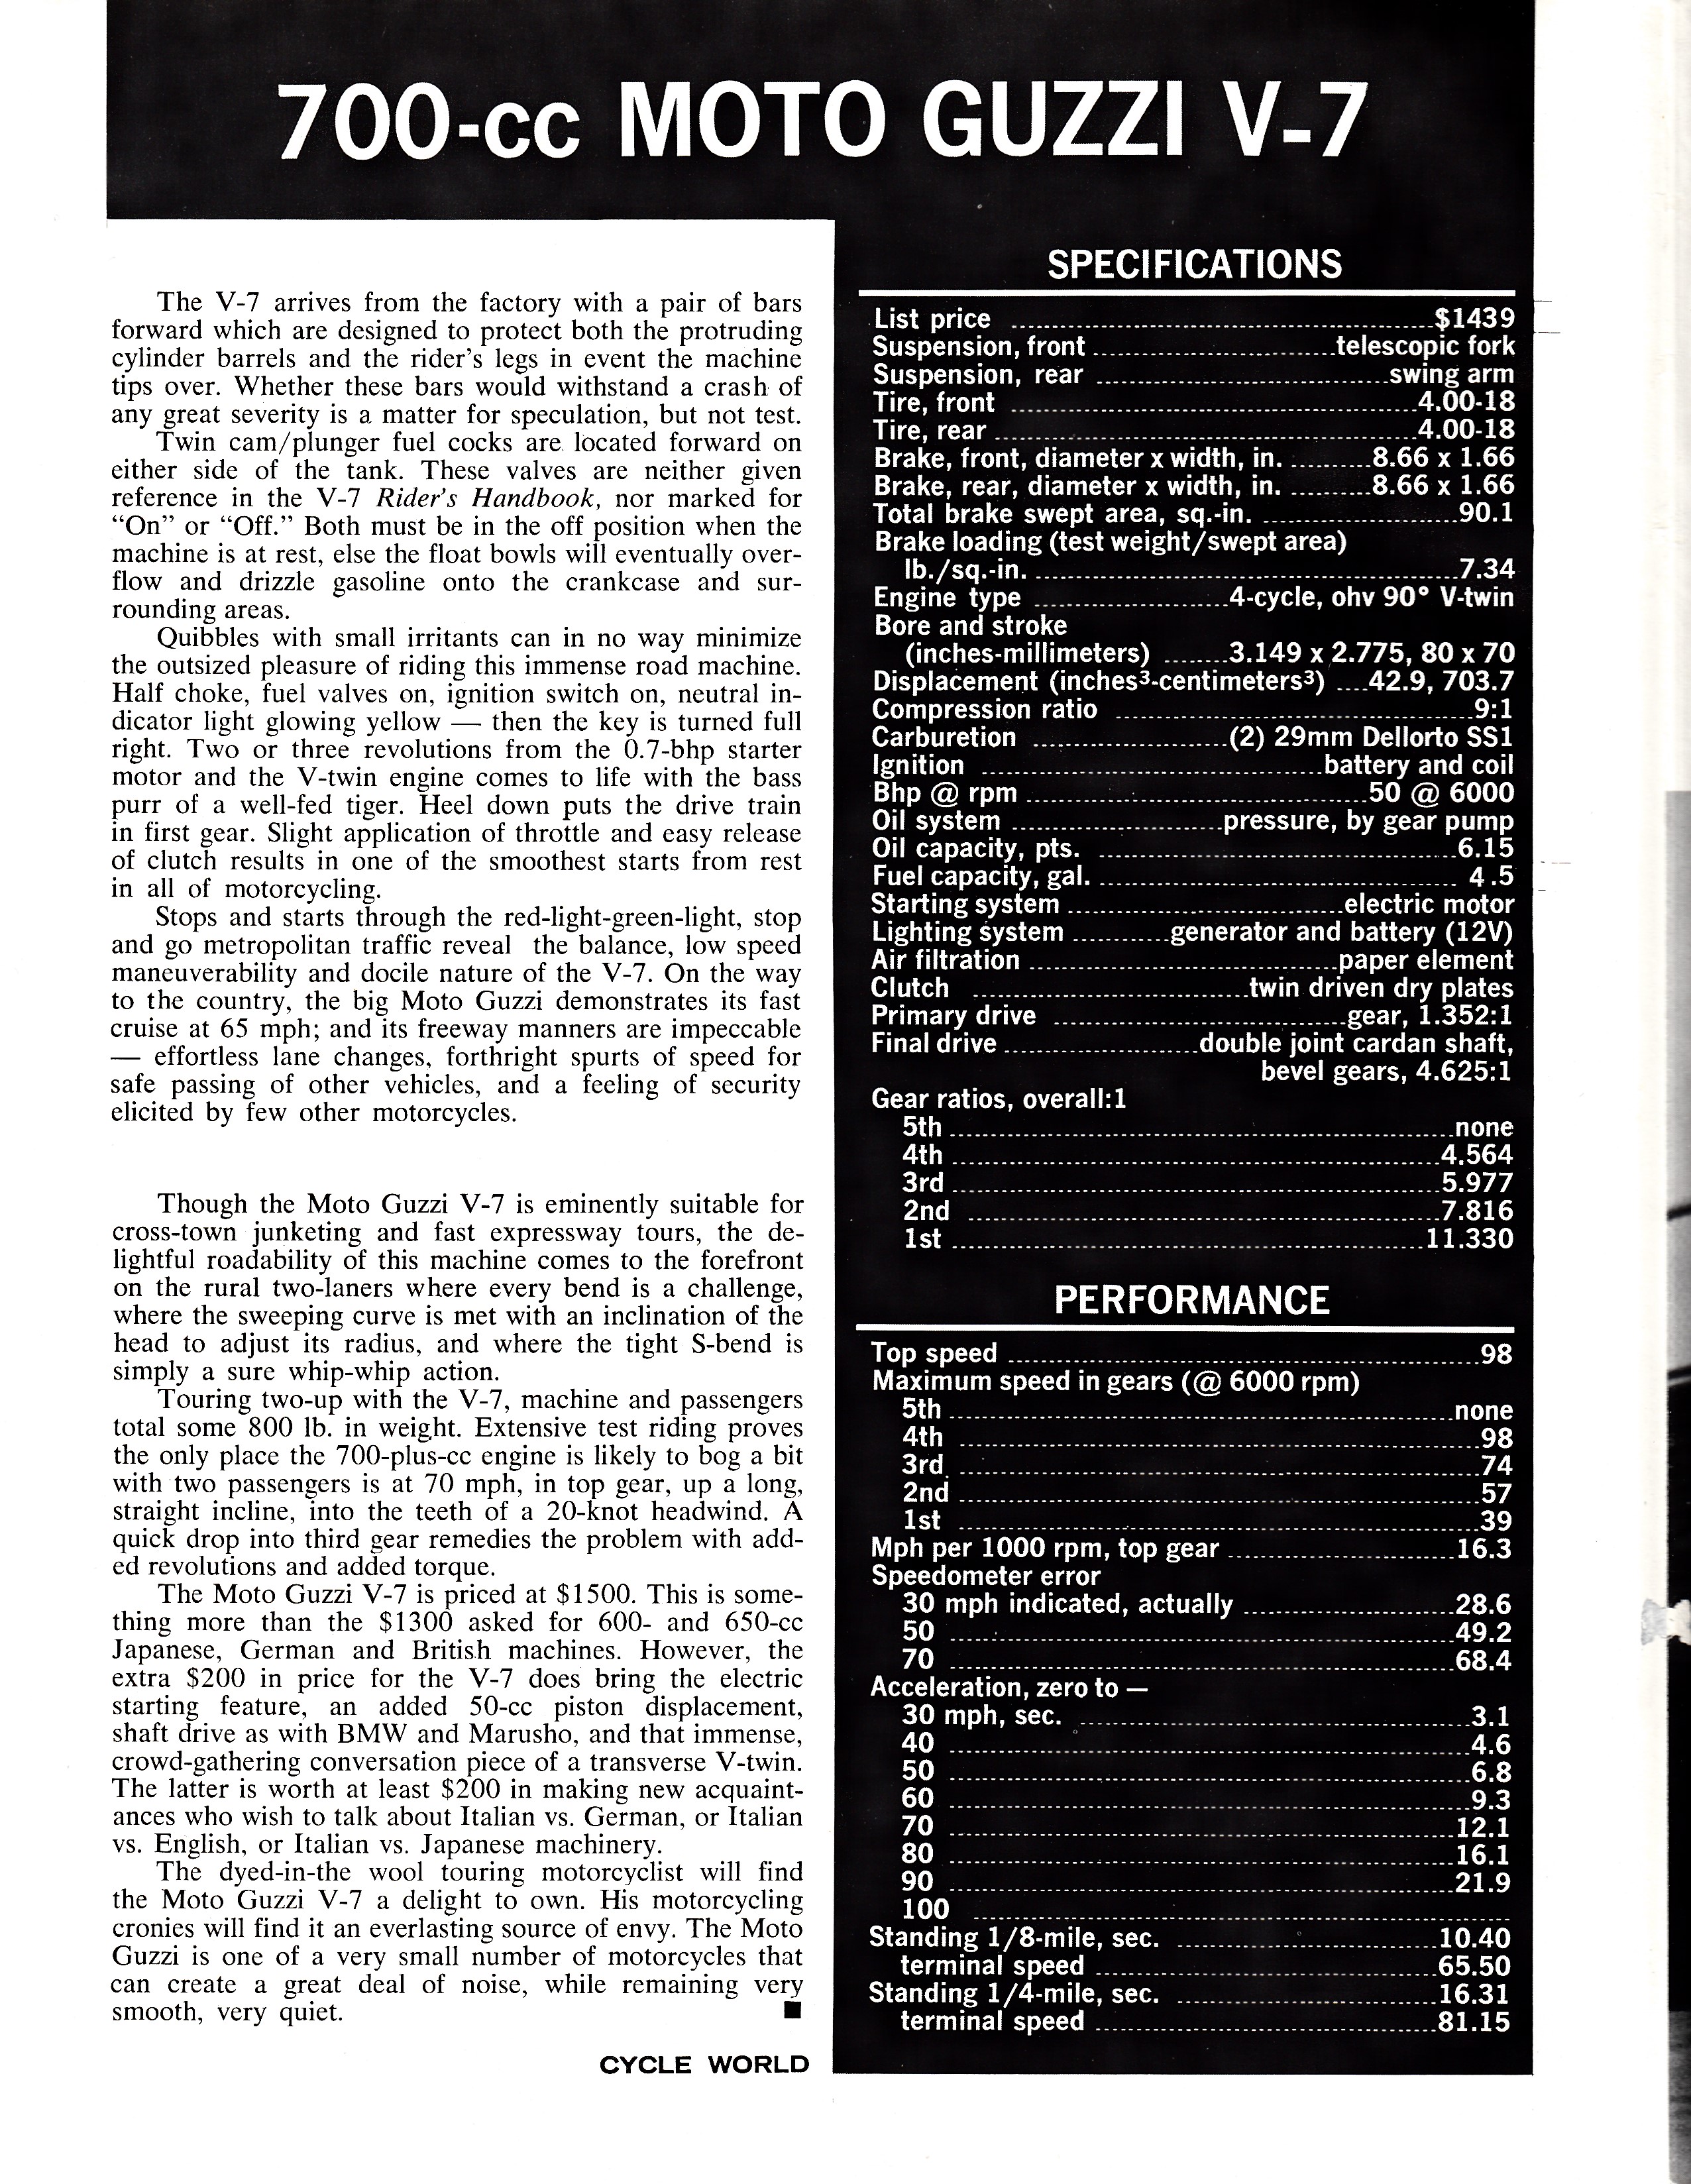 Moto Guzzi V700 factory brochure of magazine reviews, Page 4 of 8.